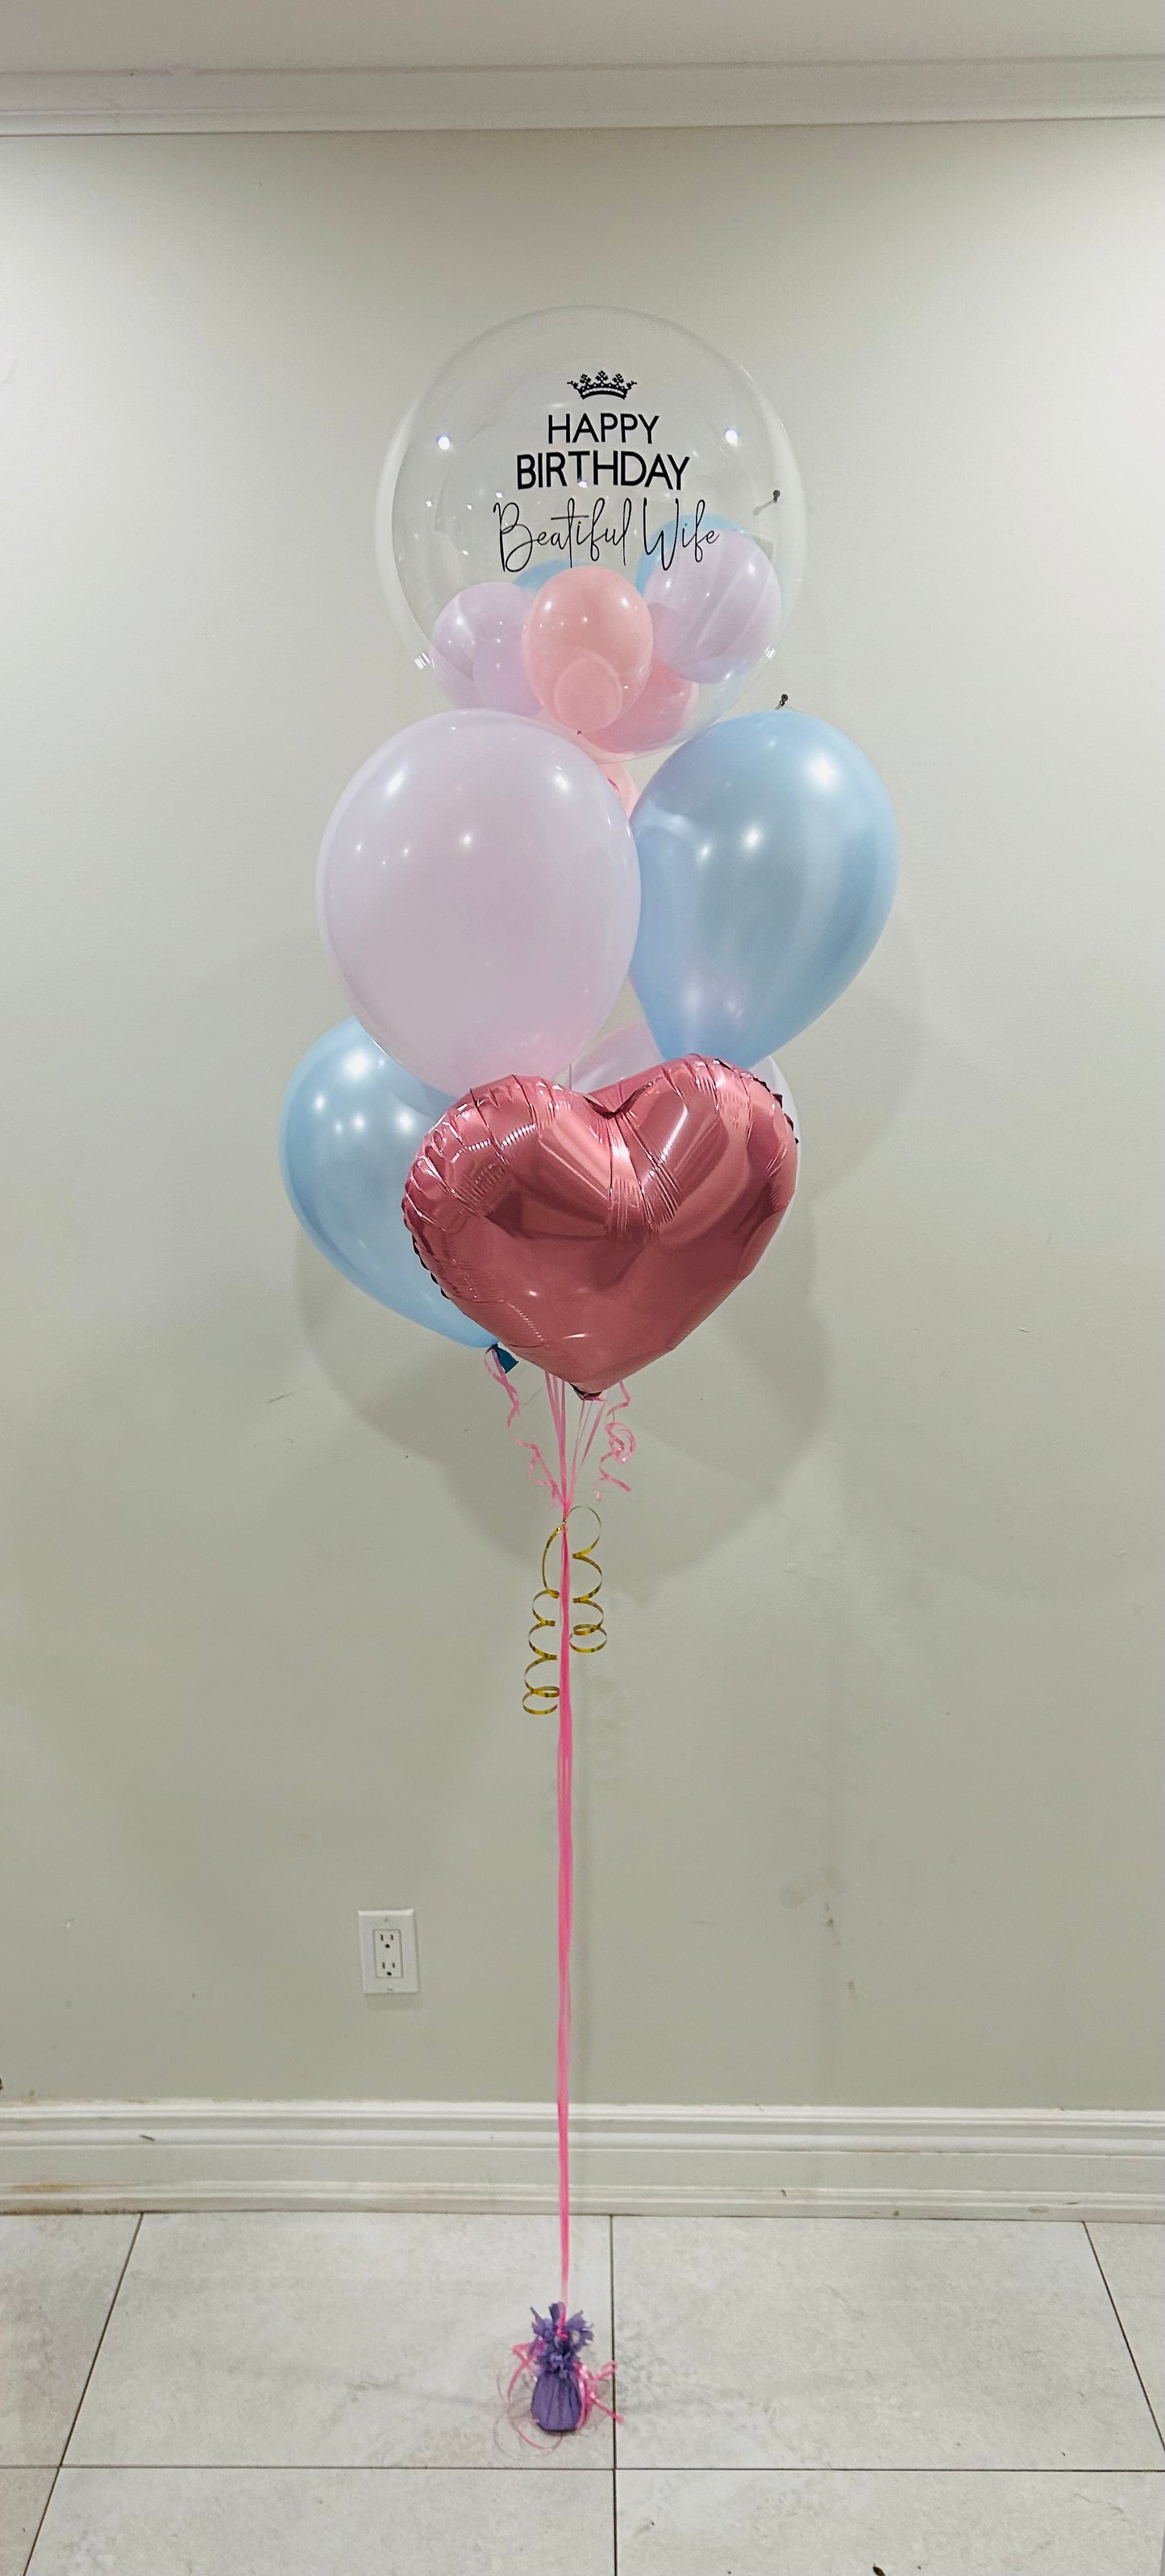 Cute balloon bouquet